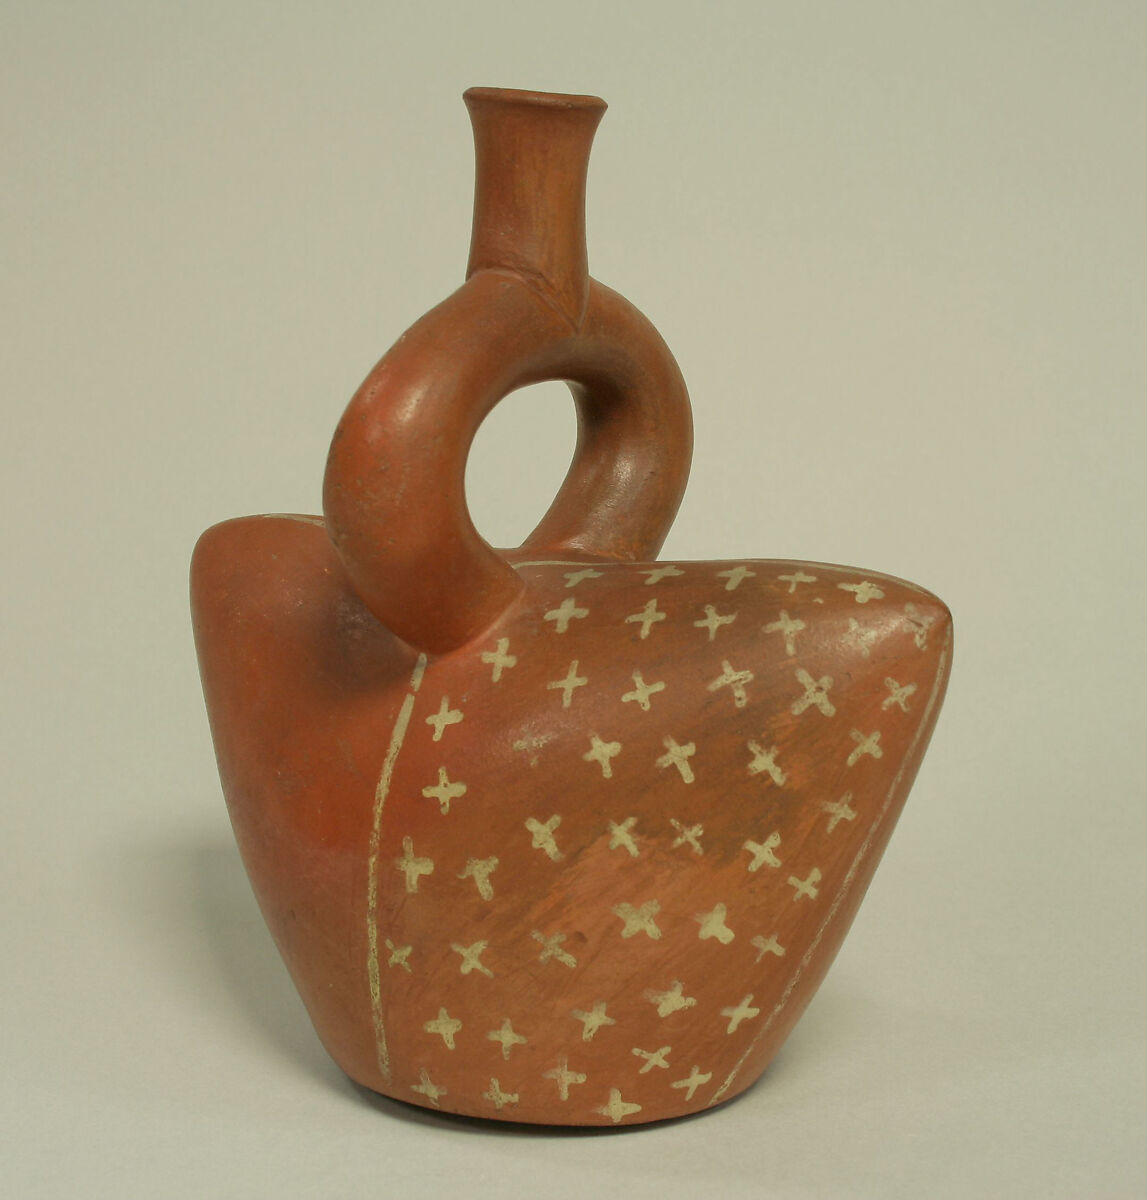 Stirrup spout bottle in cap shape, Ceramic, Moche or Salinar (?)